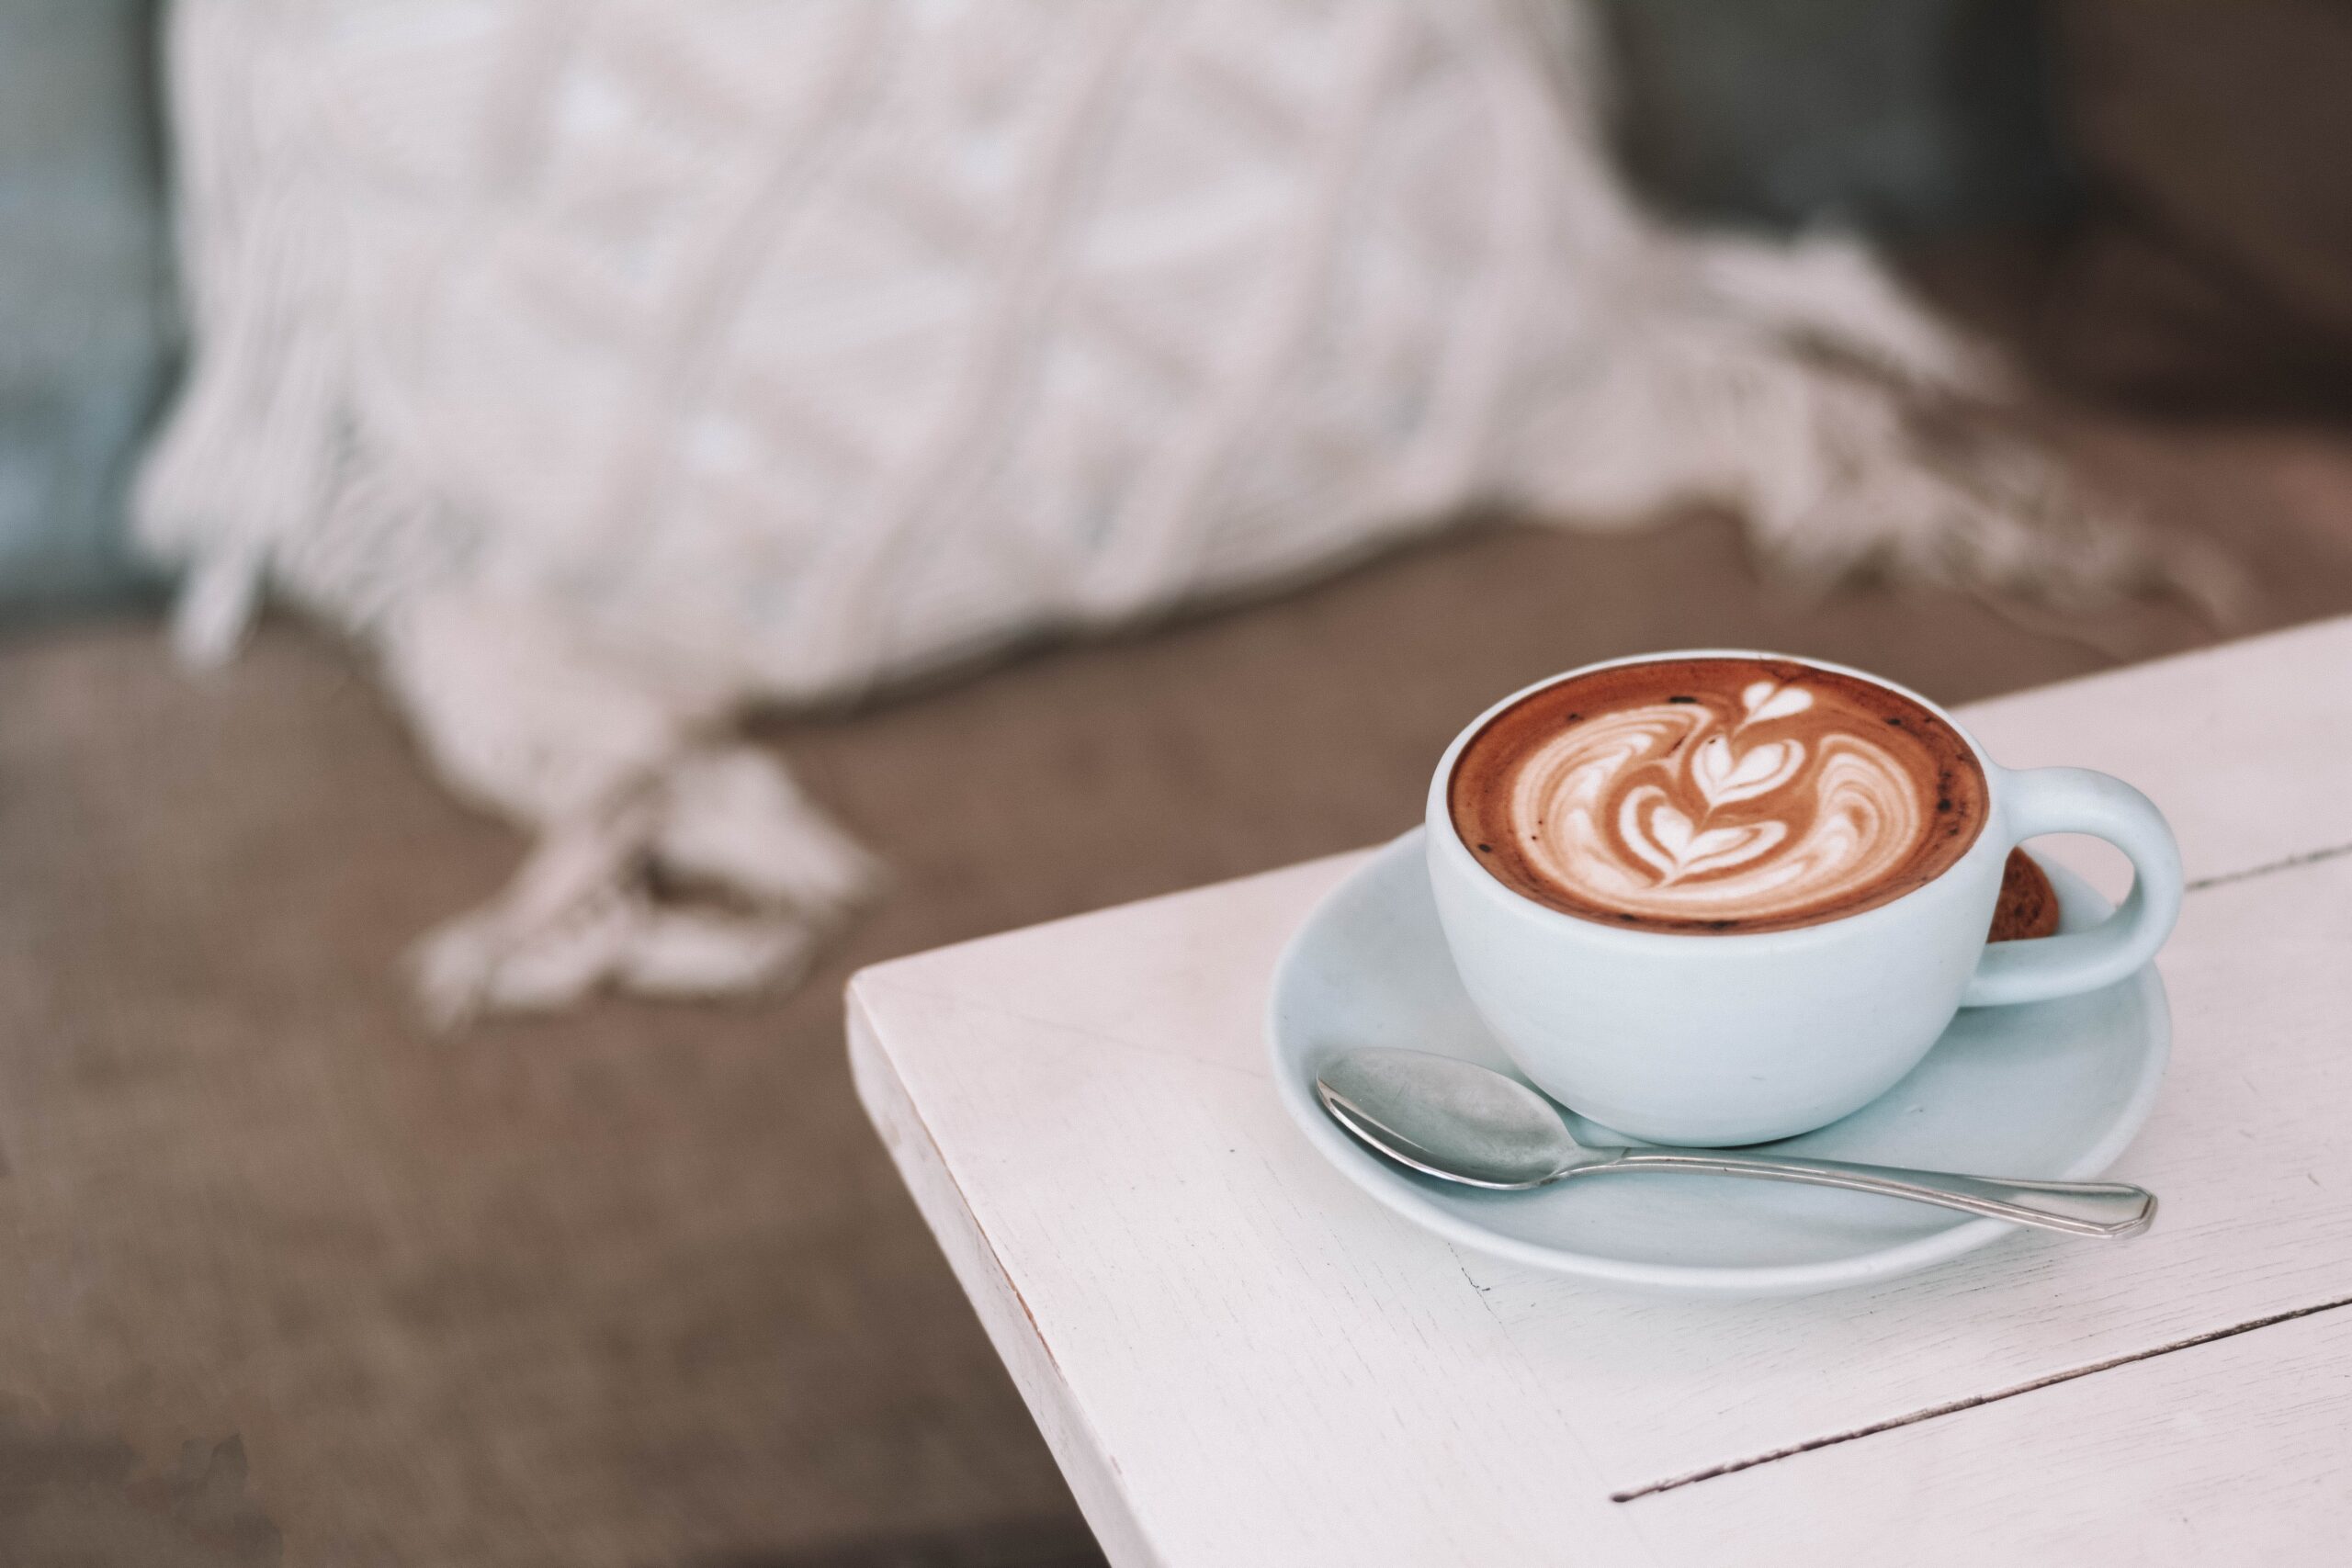 How to descale a Nespresso machine: 9 steps to keep your coffee fresh